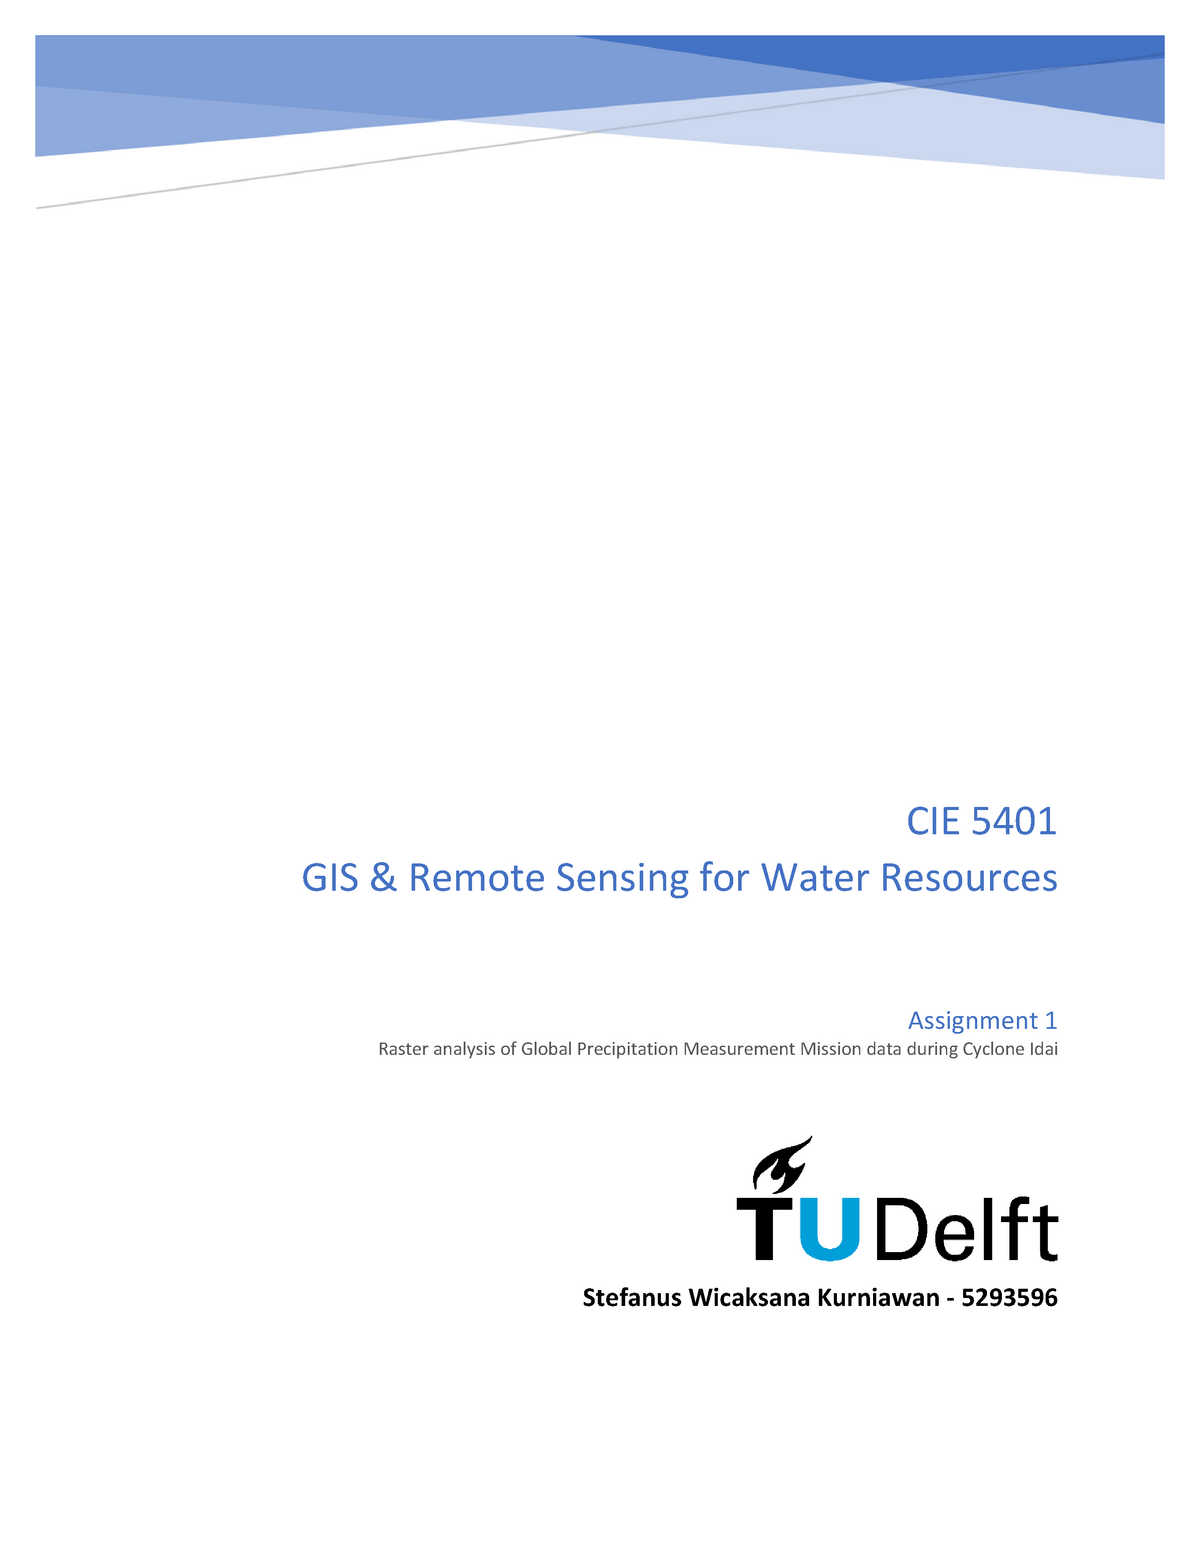 gis-assignment-1-report-cie-5401-gis-remote-sensing-for-water-resources-stefanus-wicaksana